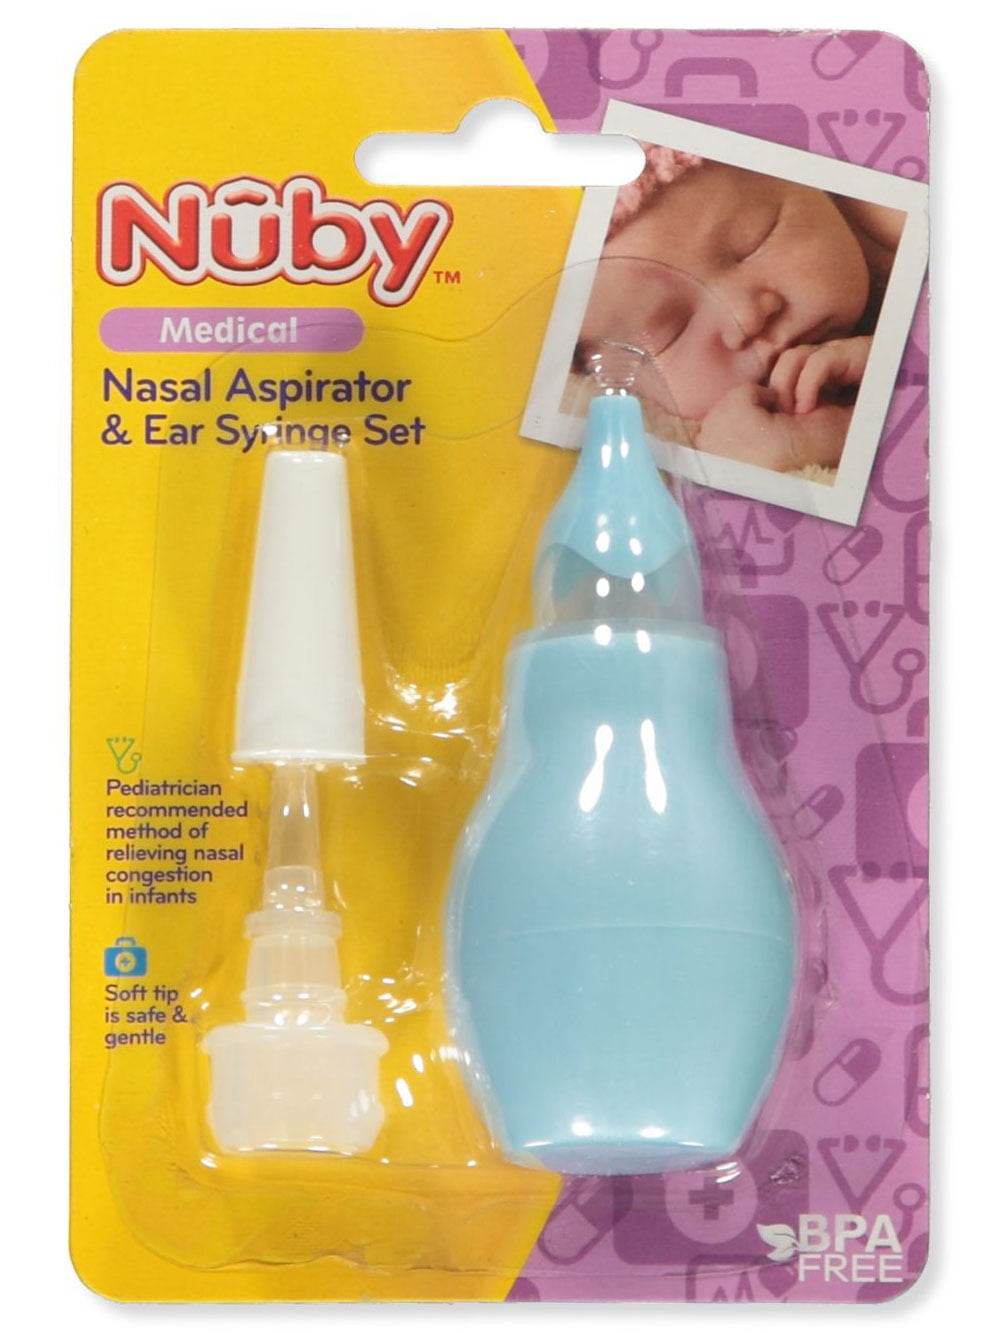 Give clutch magic Nuby Medical Nasal Aspirator & Ear Syringe Set - green, one size -  Walmart.com